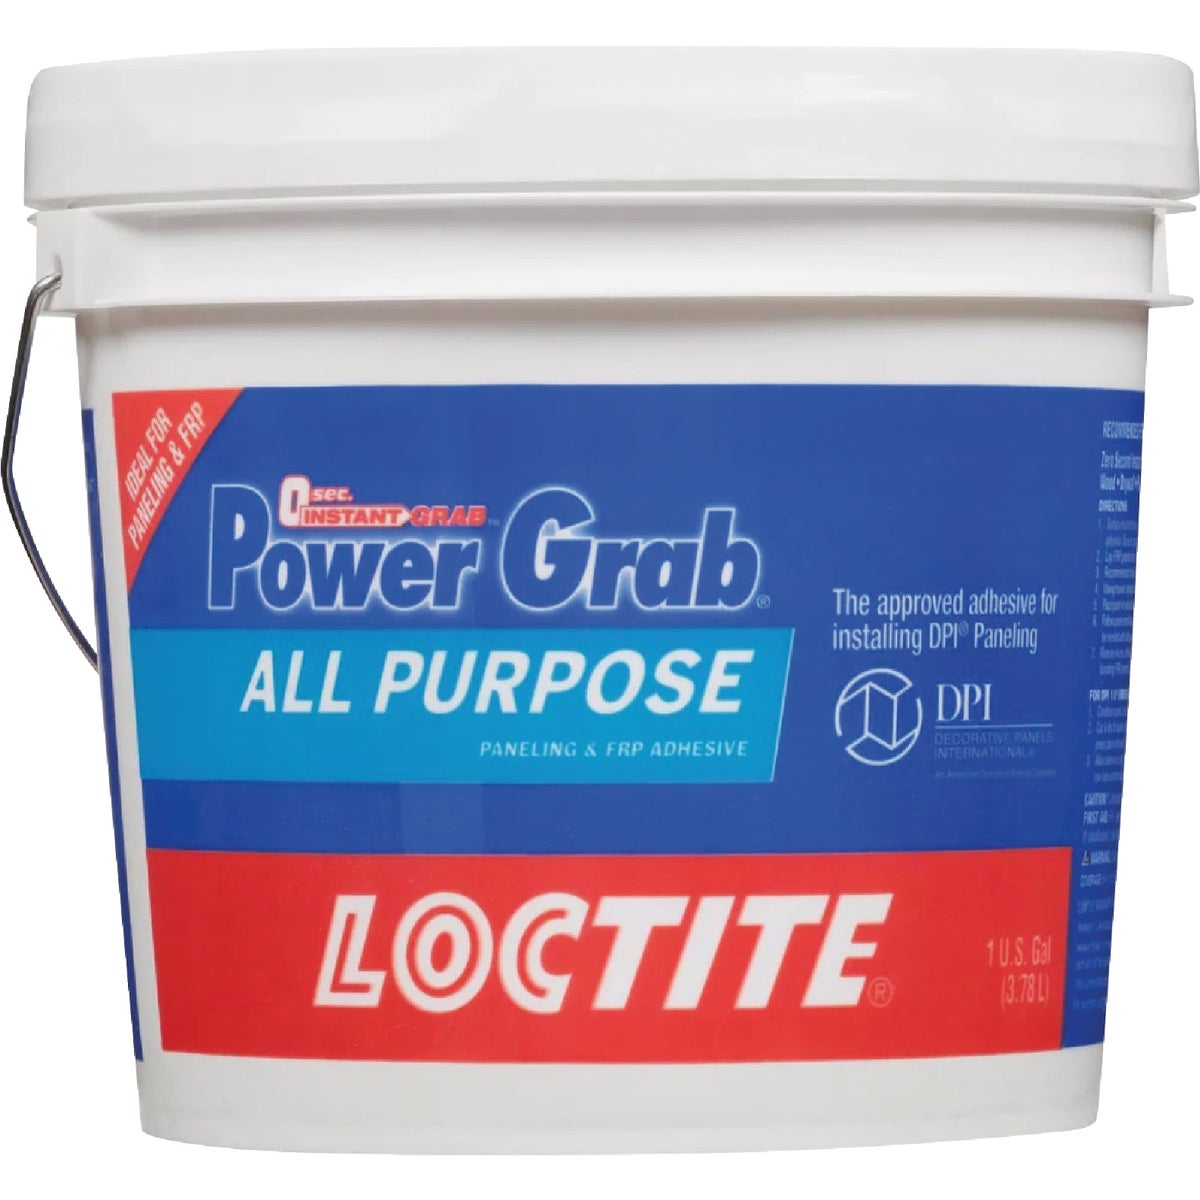 LOCTITE Power Grab 1 Gal. All-Purpose Paneling & FRP Adhesive